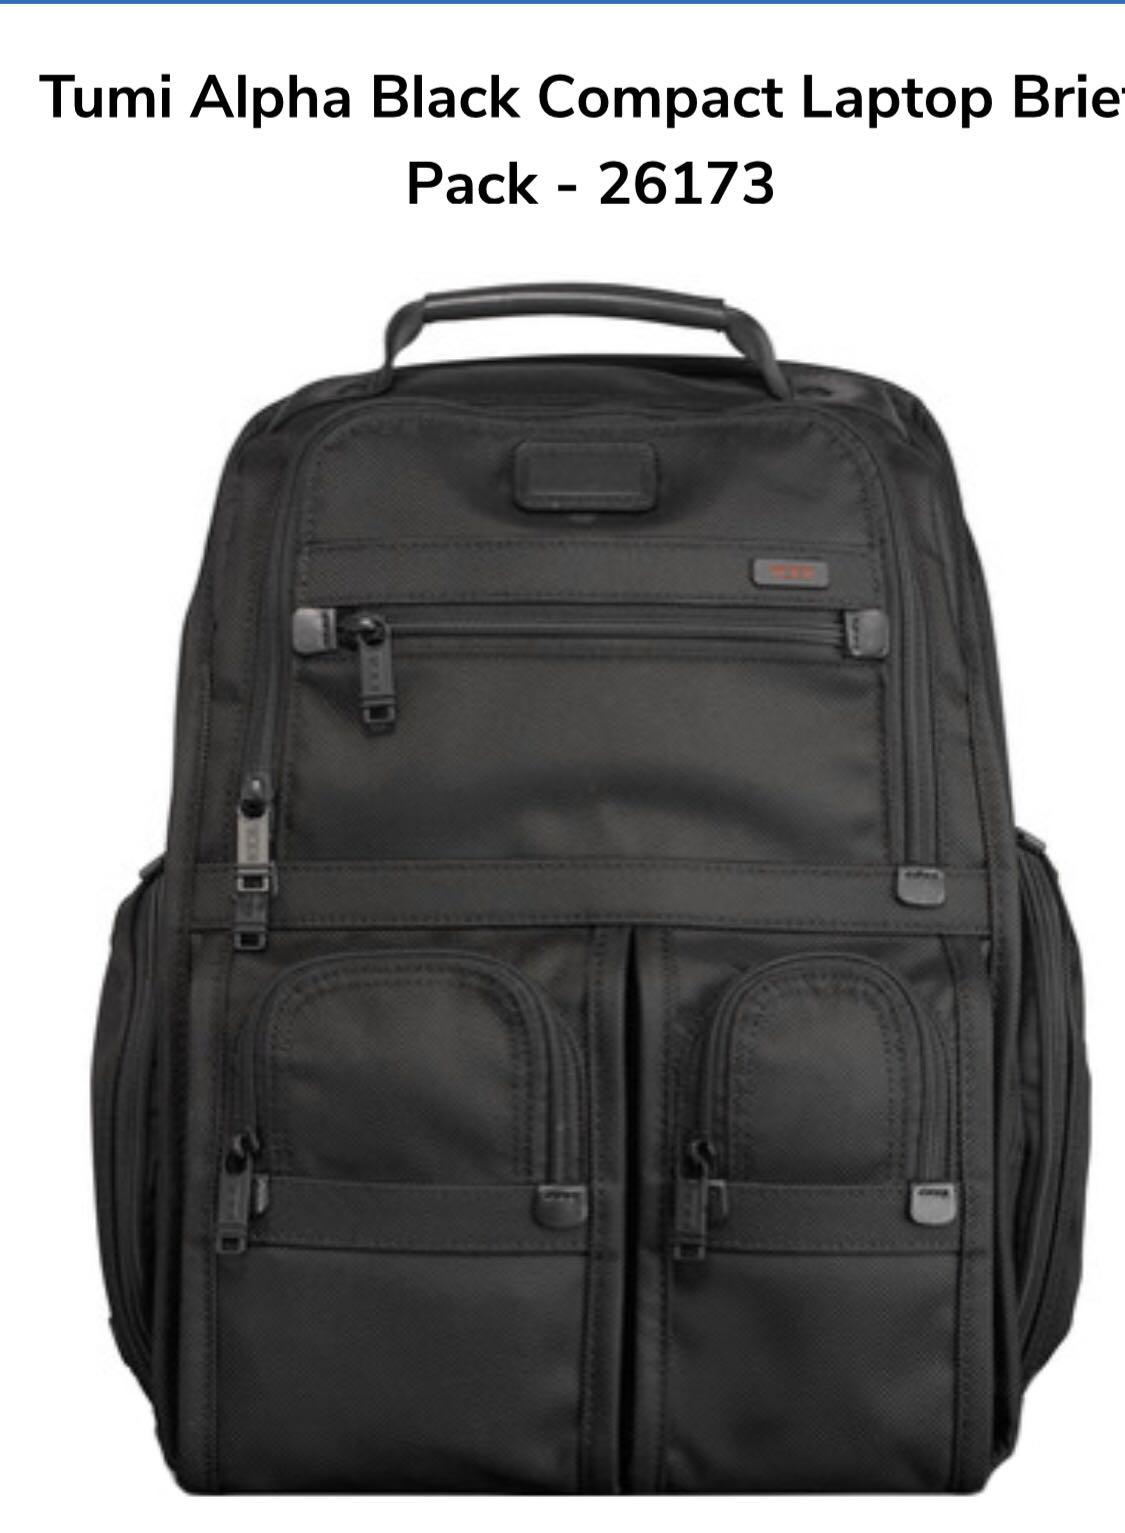 Tumi Backpack Alpha Bravo Compact Laptop Pack Black 26173DH, Men's